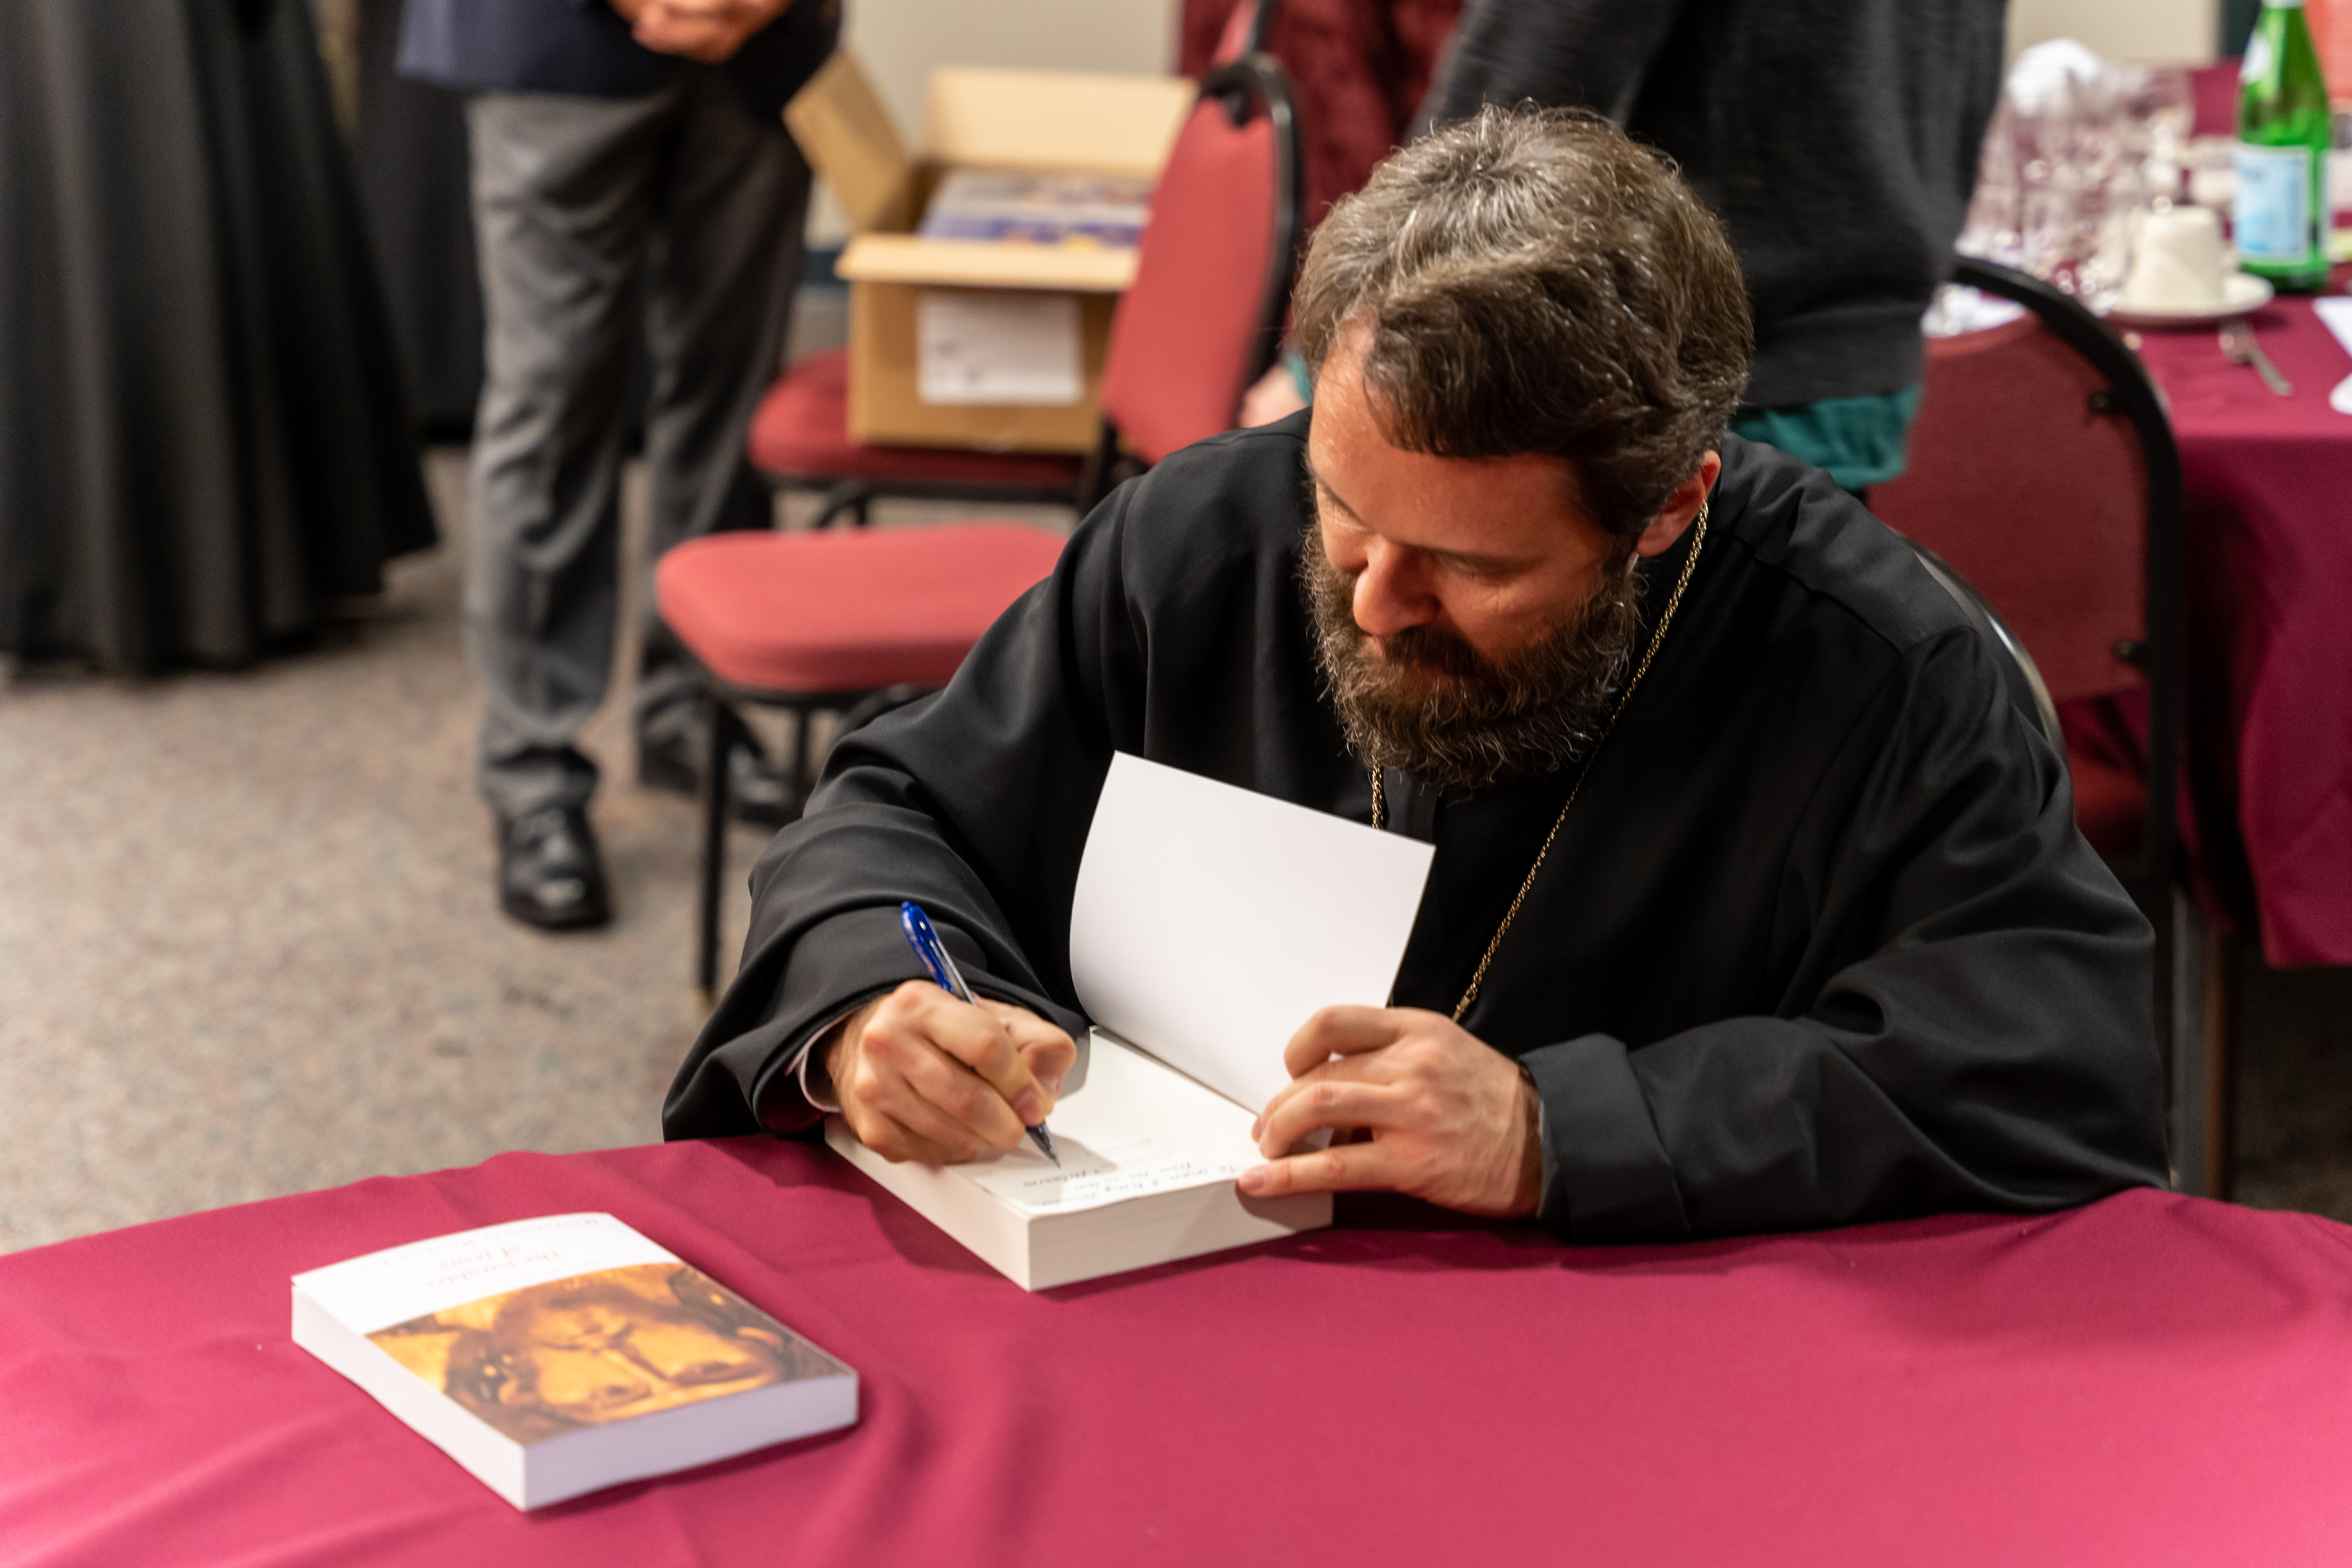 Metropolitan Hilarion signs copies of his books